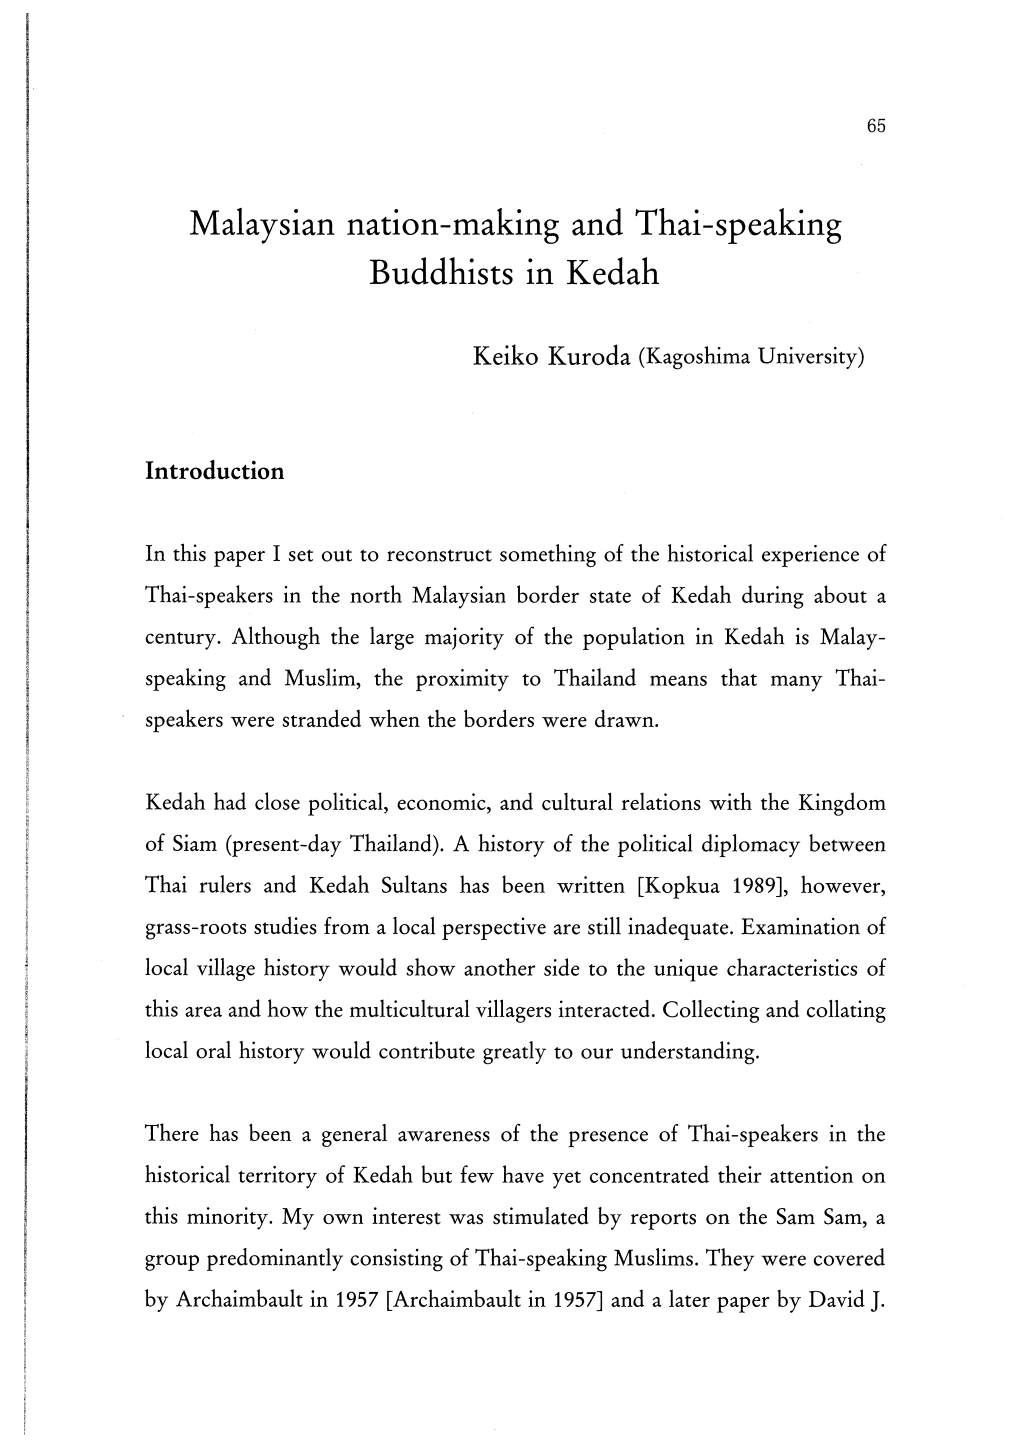 Buddhists in Kedah